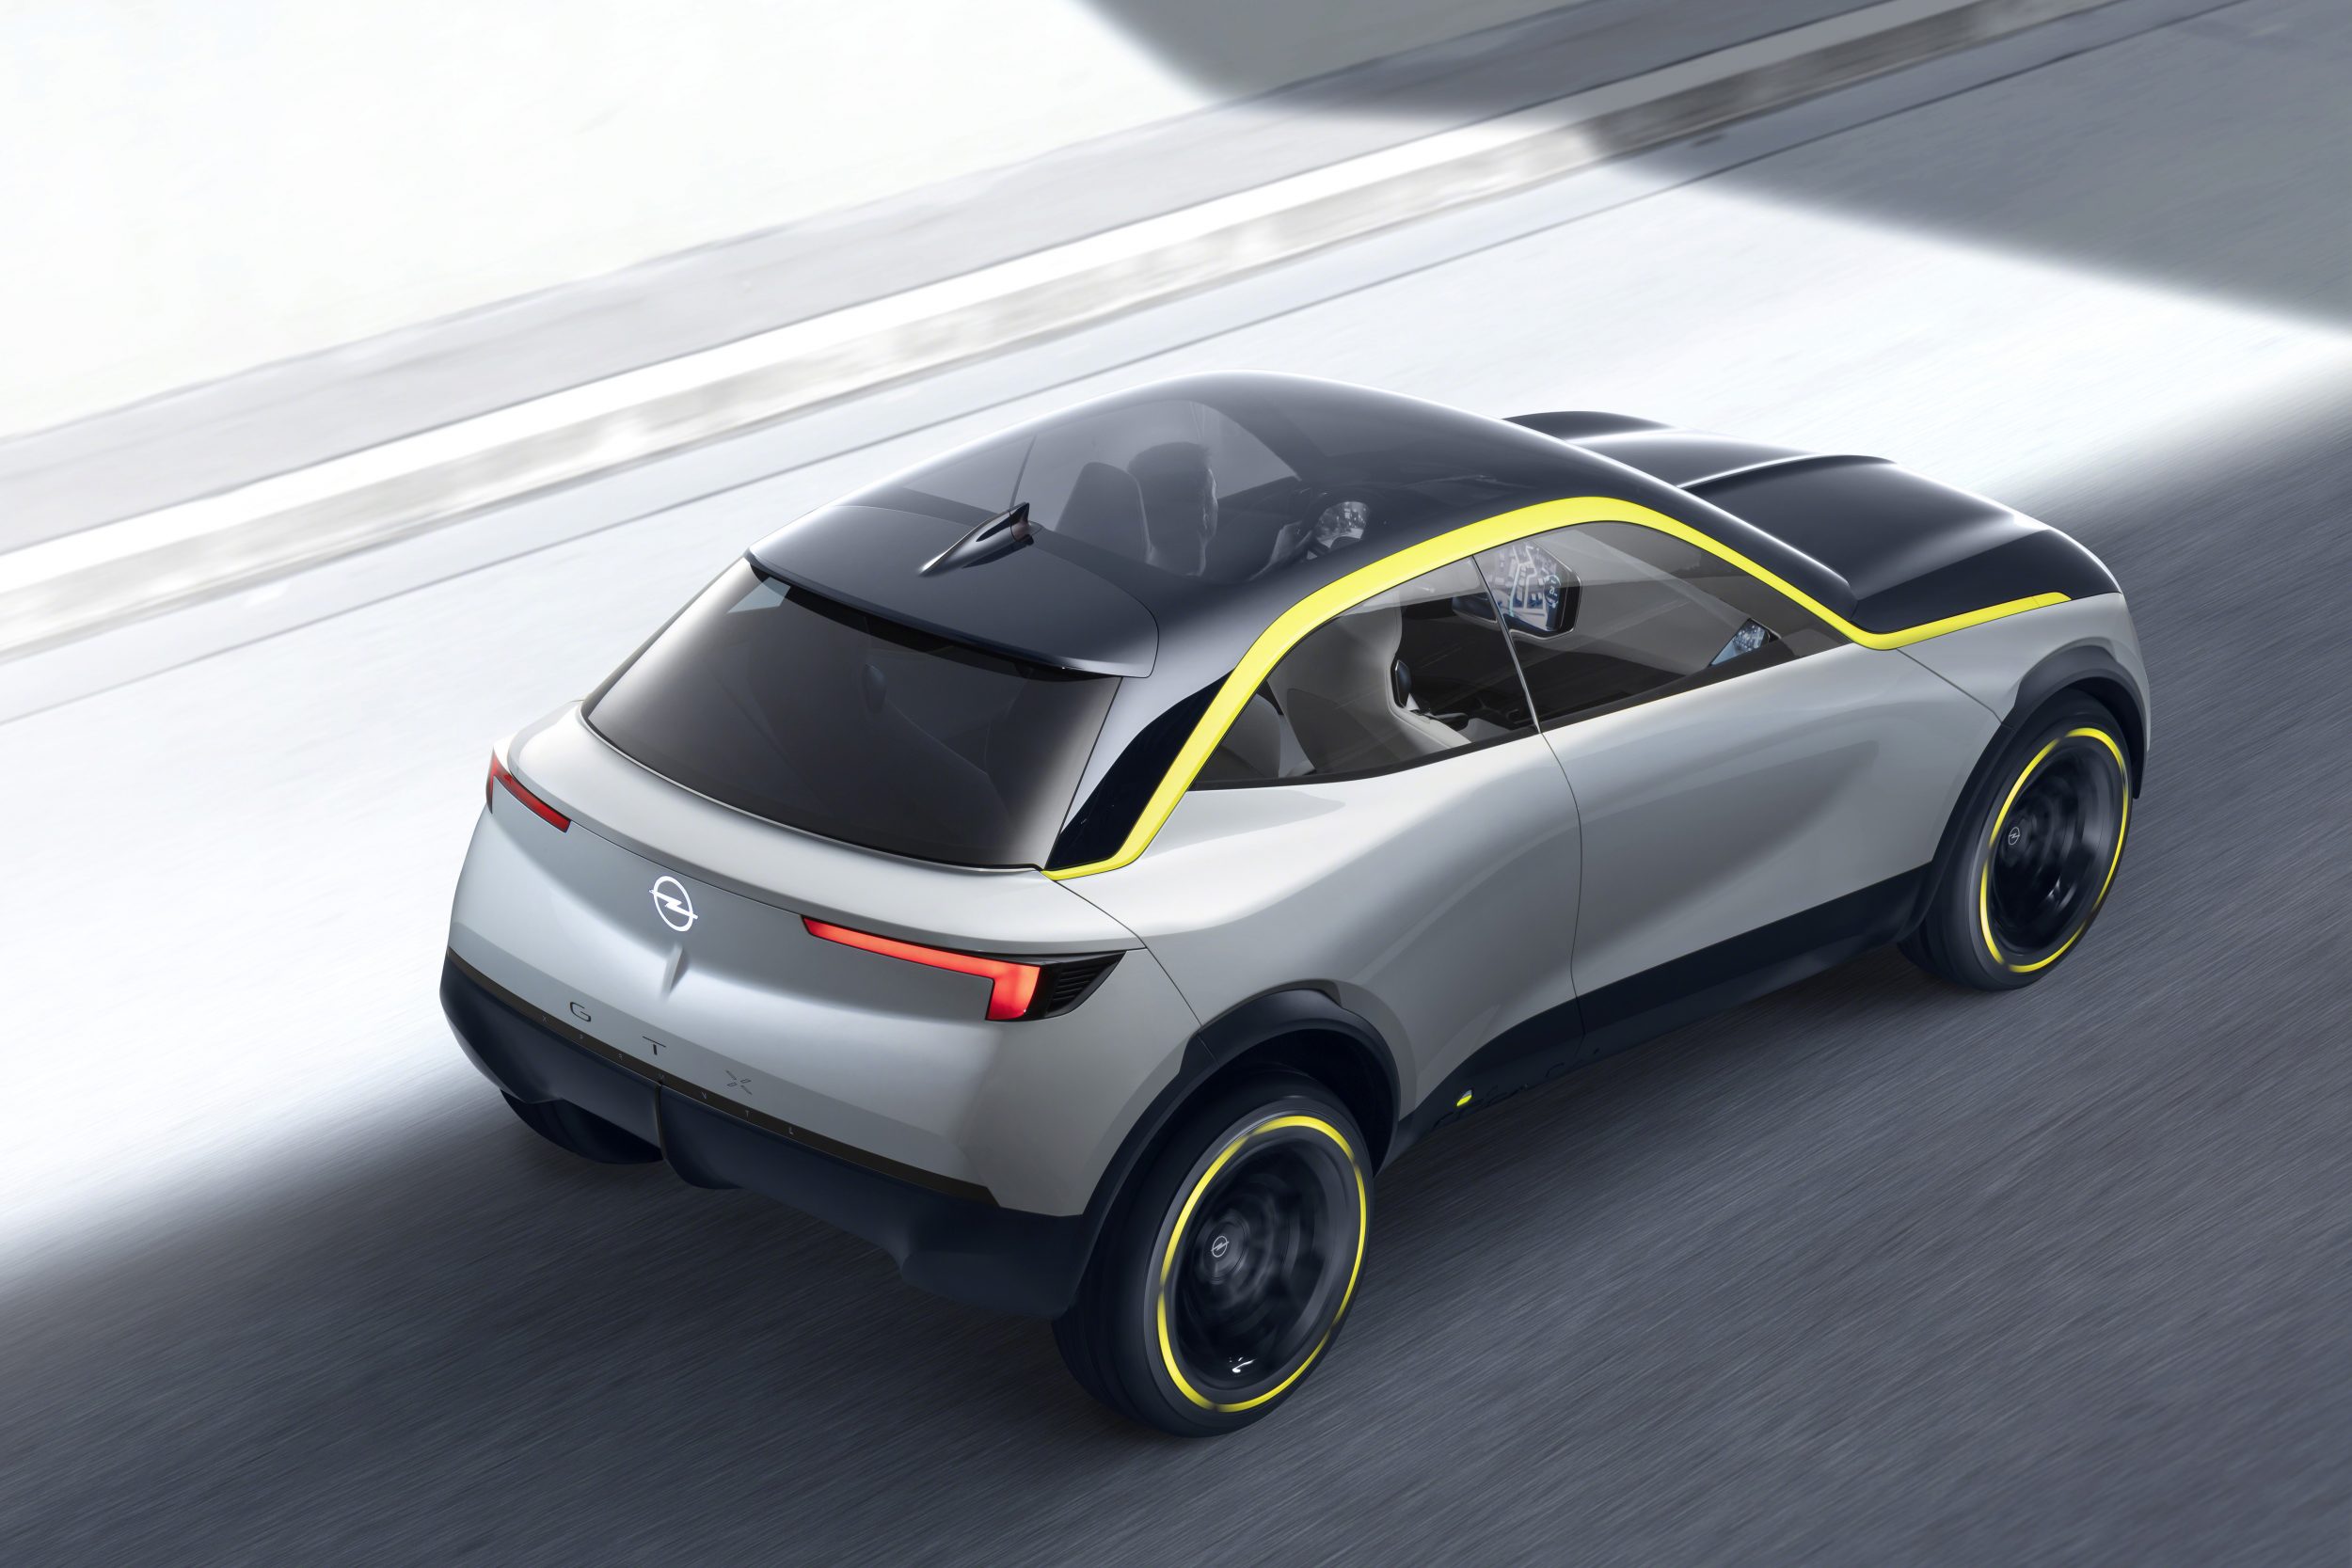 Opel Mokka (2021) staat startklaar